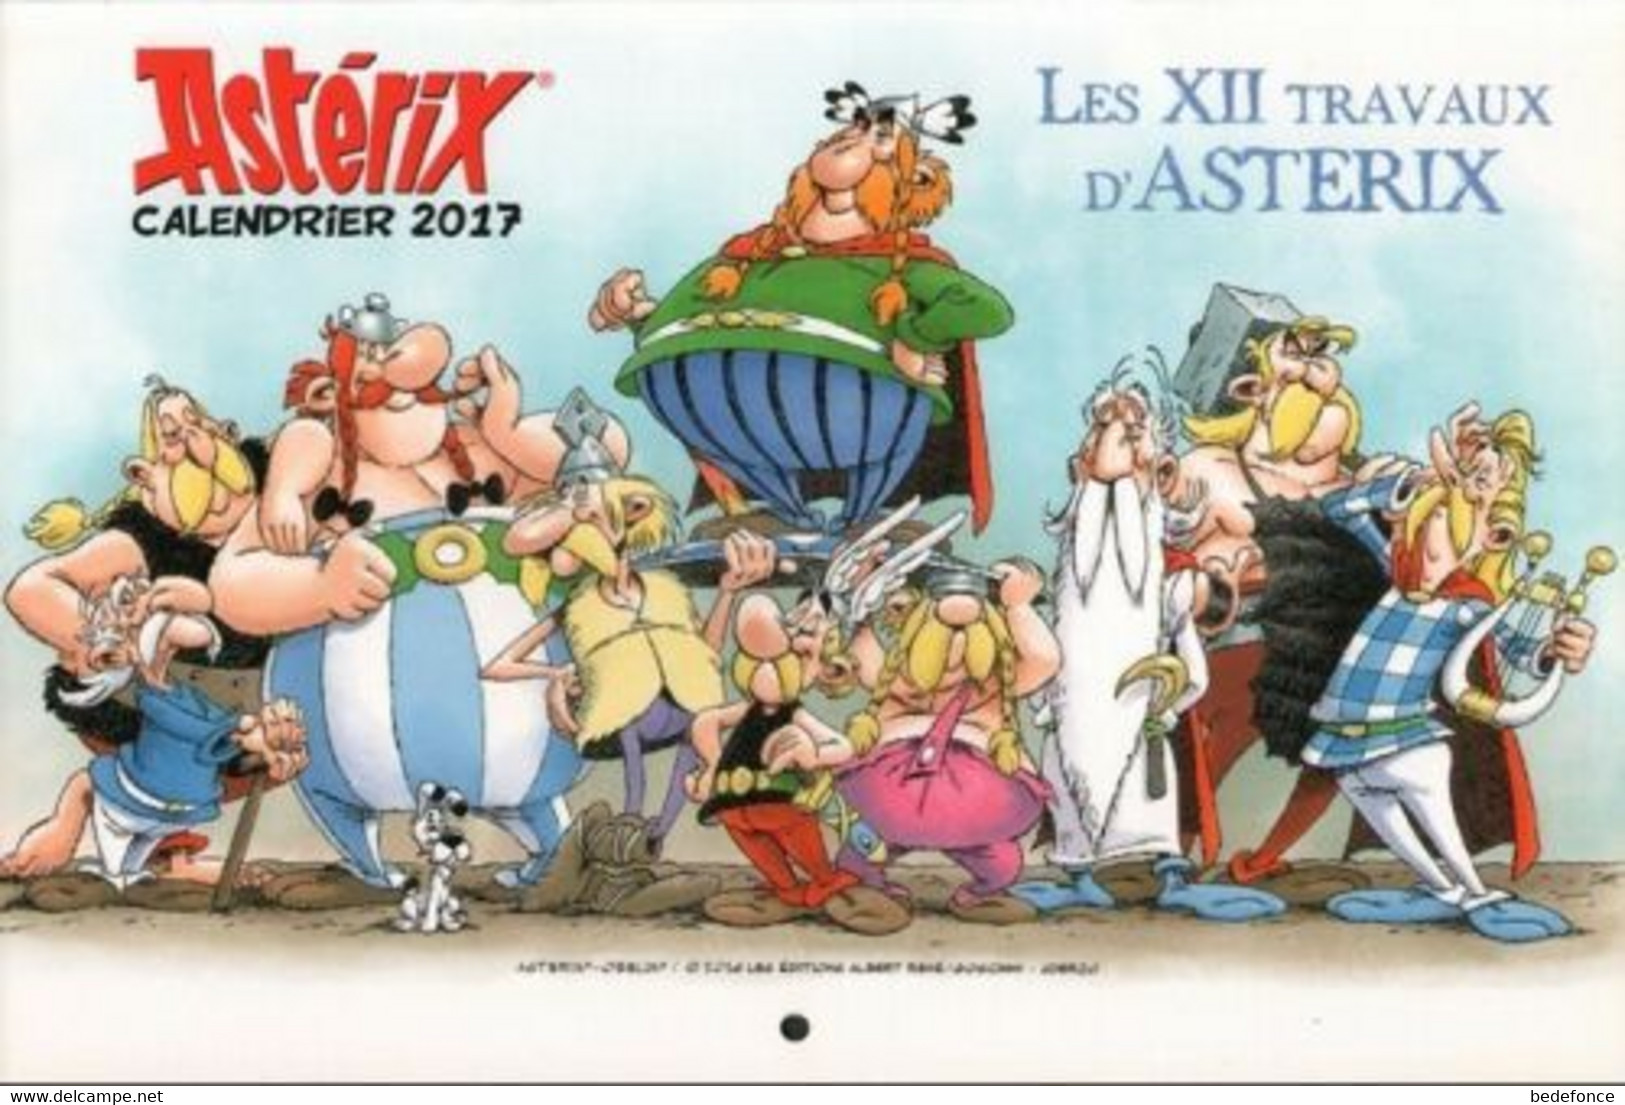 Astérix - Calendrier 2017 - Les XII Travaux D'Astérix - Goscinny Et Uderzo - Agendas & Calendriers